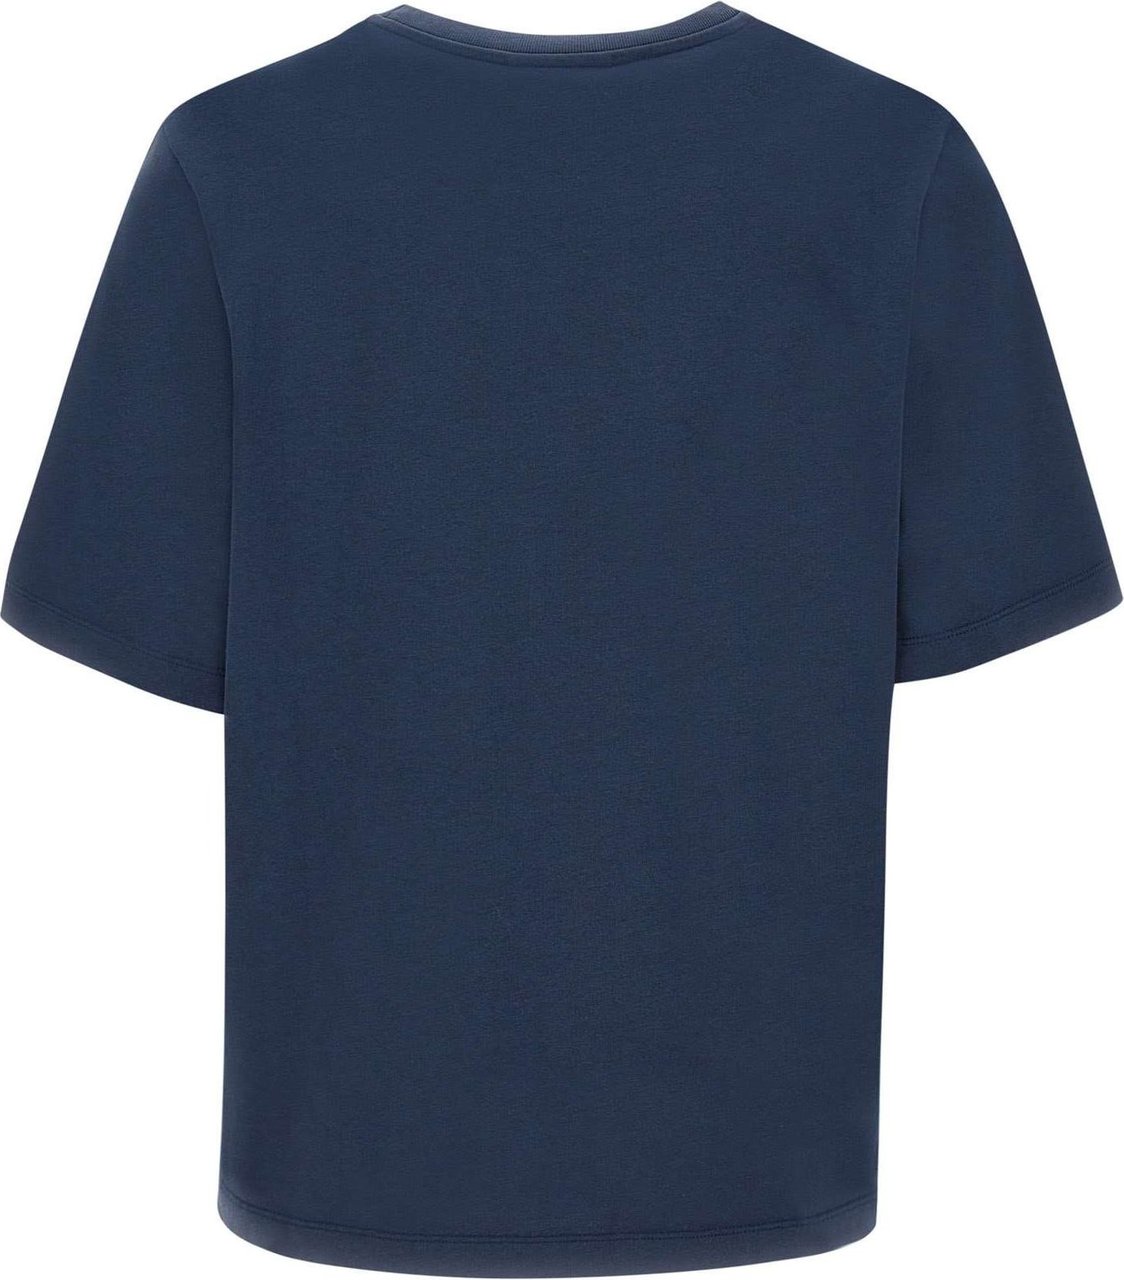 Maison Kitsuné Floral Logo Embroidery T-Shirt Blauw